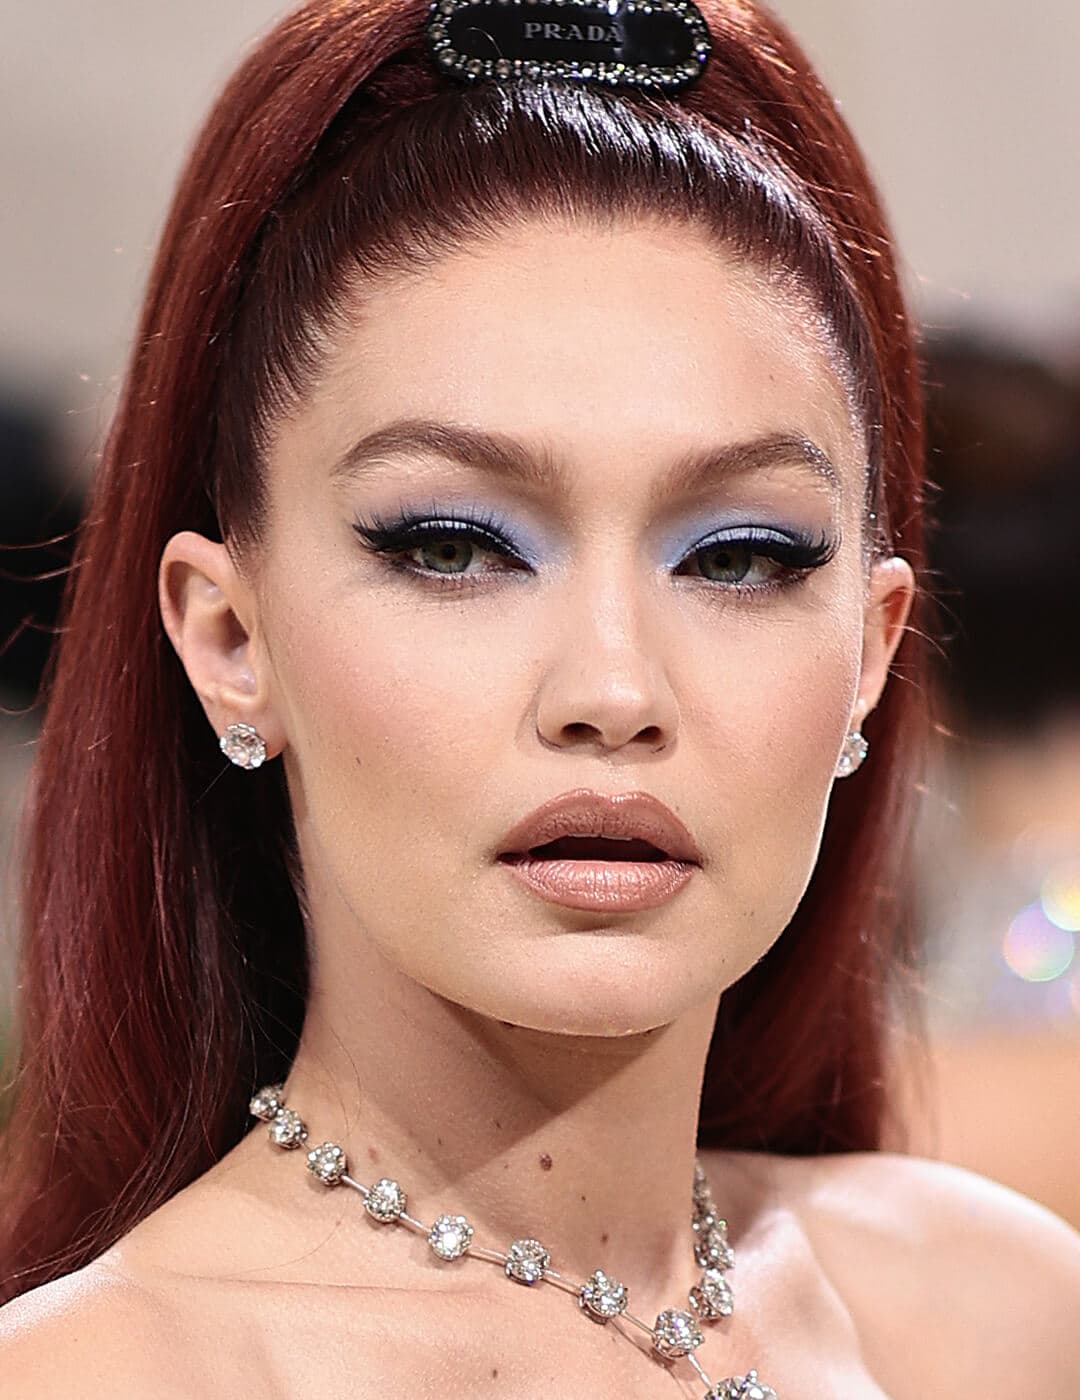 Gigi Hadid looking fierce in a matte light blue eyeshadow look and nude lips